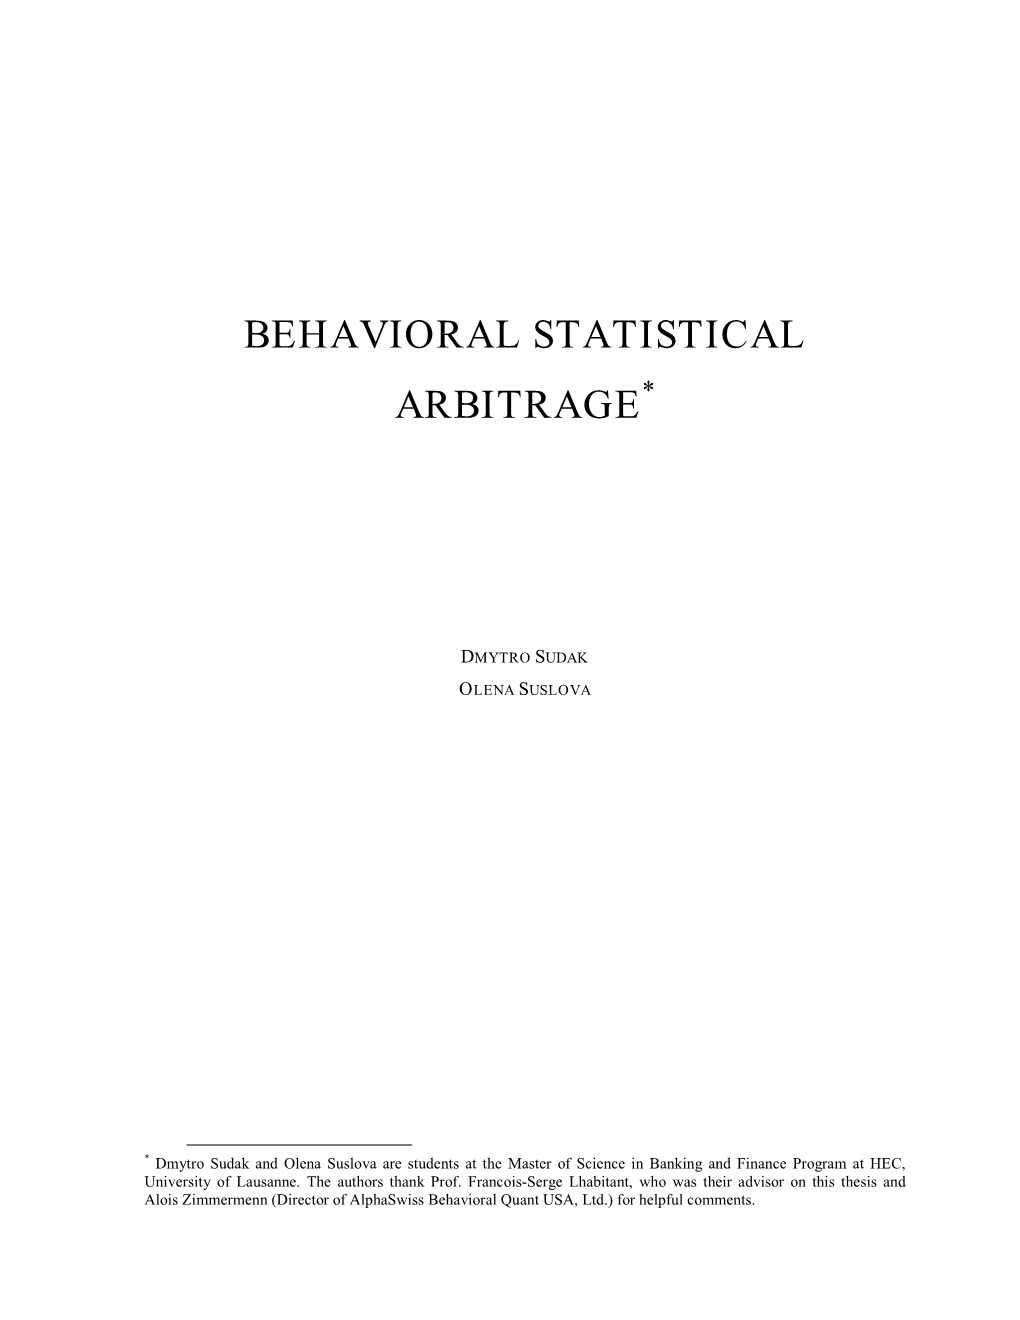 Behavioral Statistical Arbitrage*